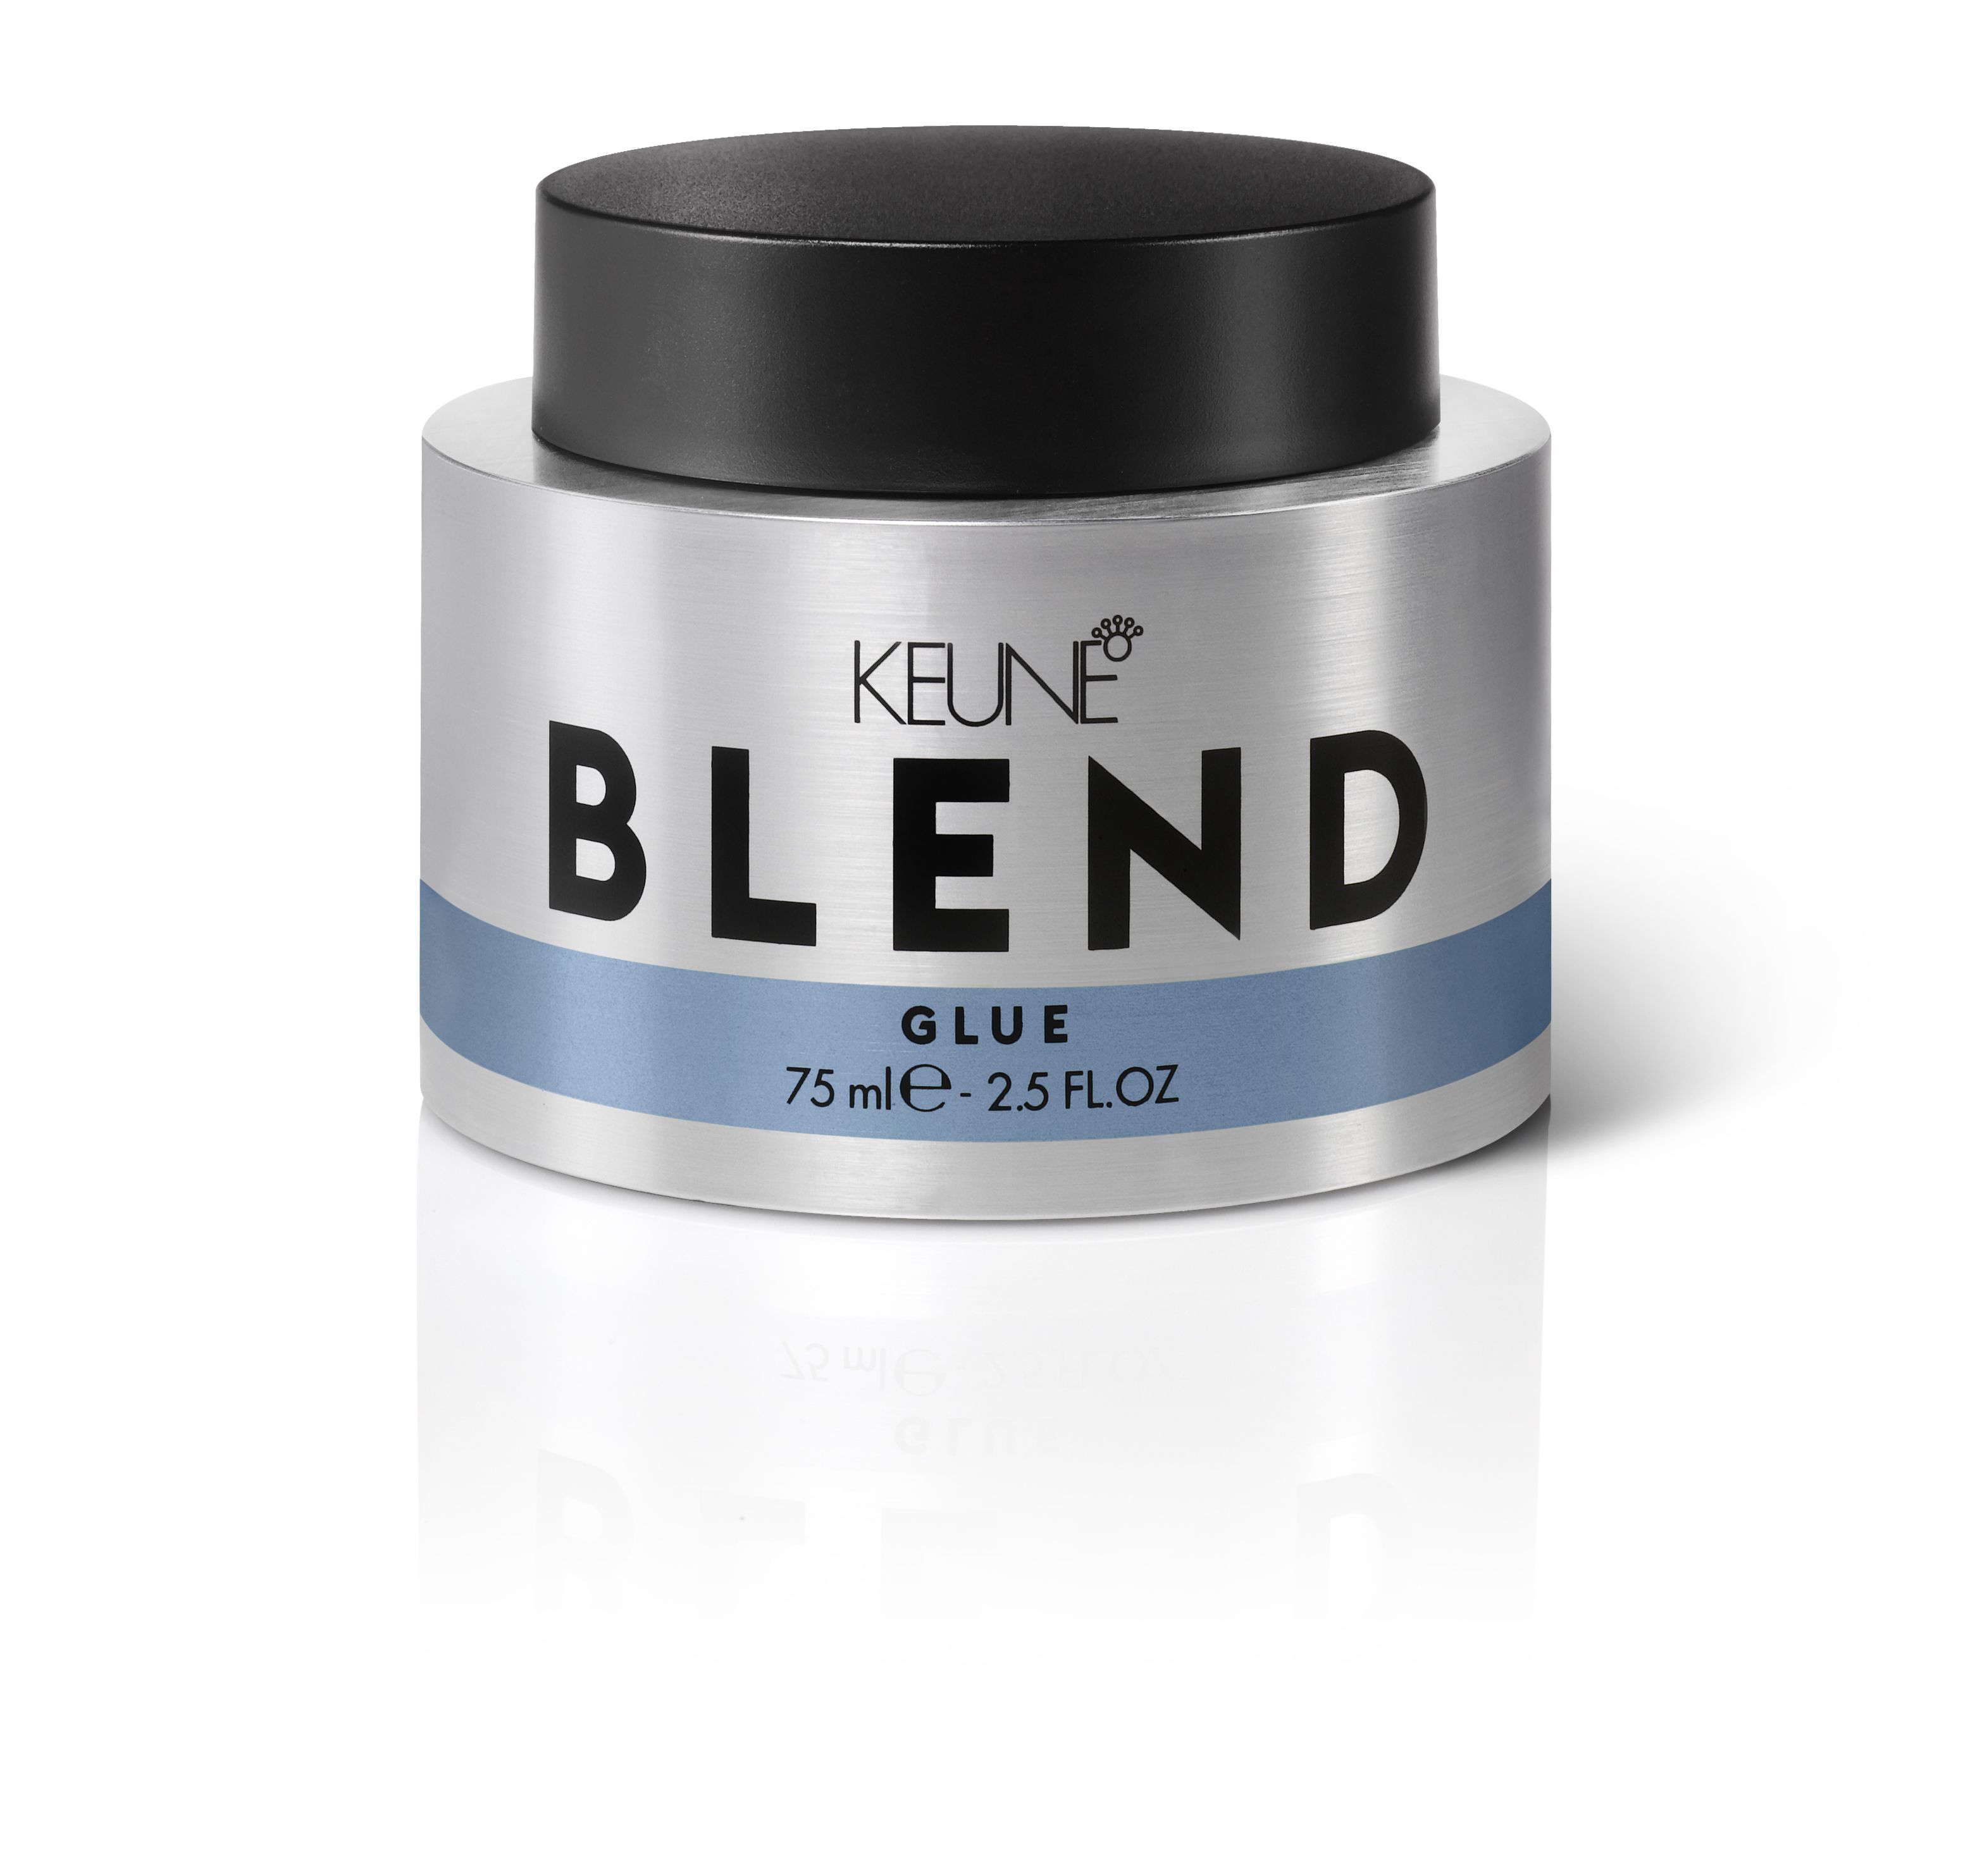 Keune Blend Glue Gum 75 ml: Buy Keune Blend Glue Gum 75 ml at Best ...